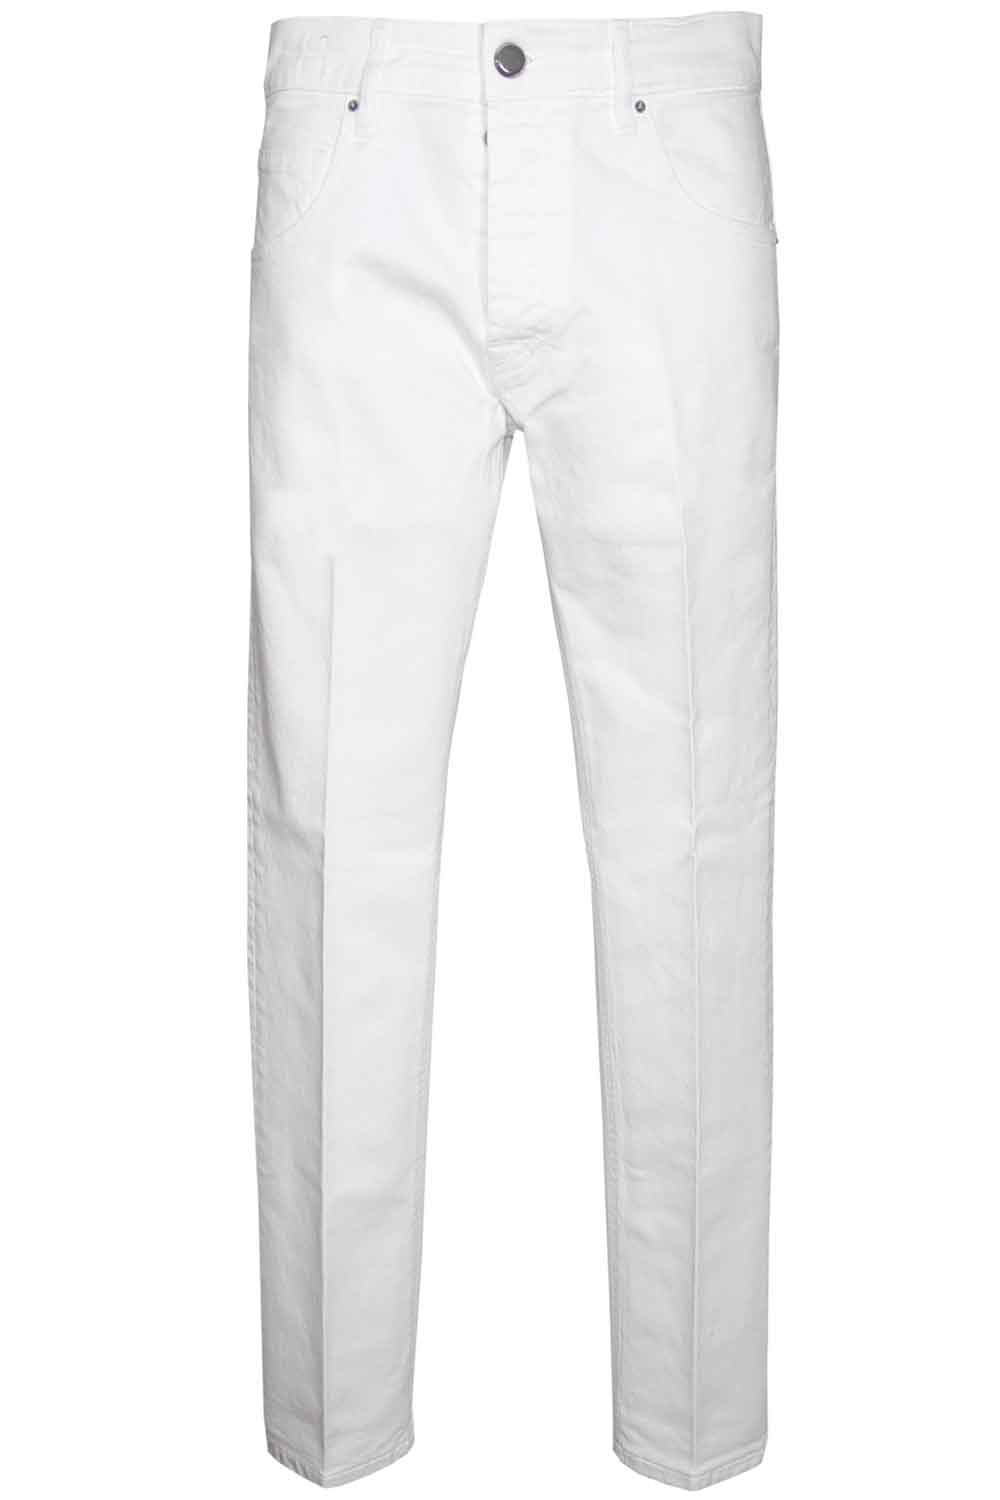 Image of Pantalone bianco- DON THE FULLER